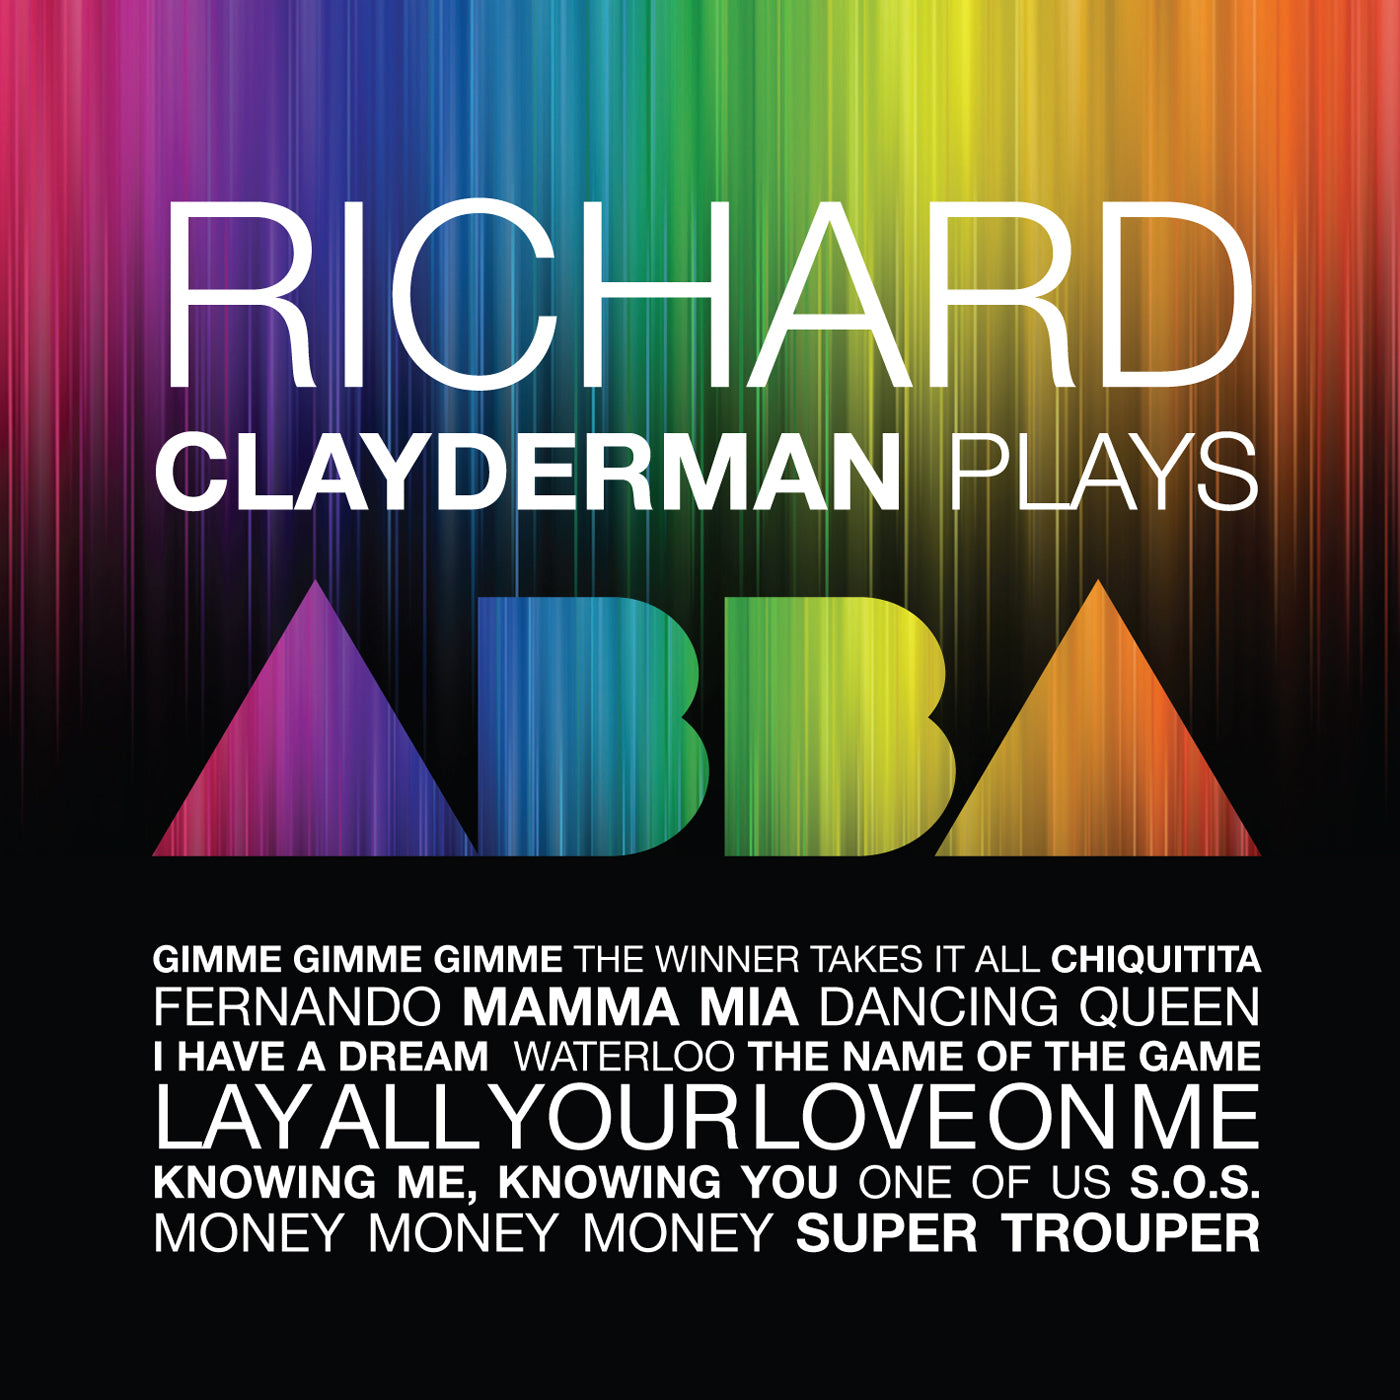 RICHARD CLAYDERMAN - PLAYS ABBA